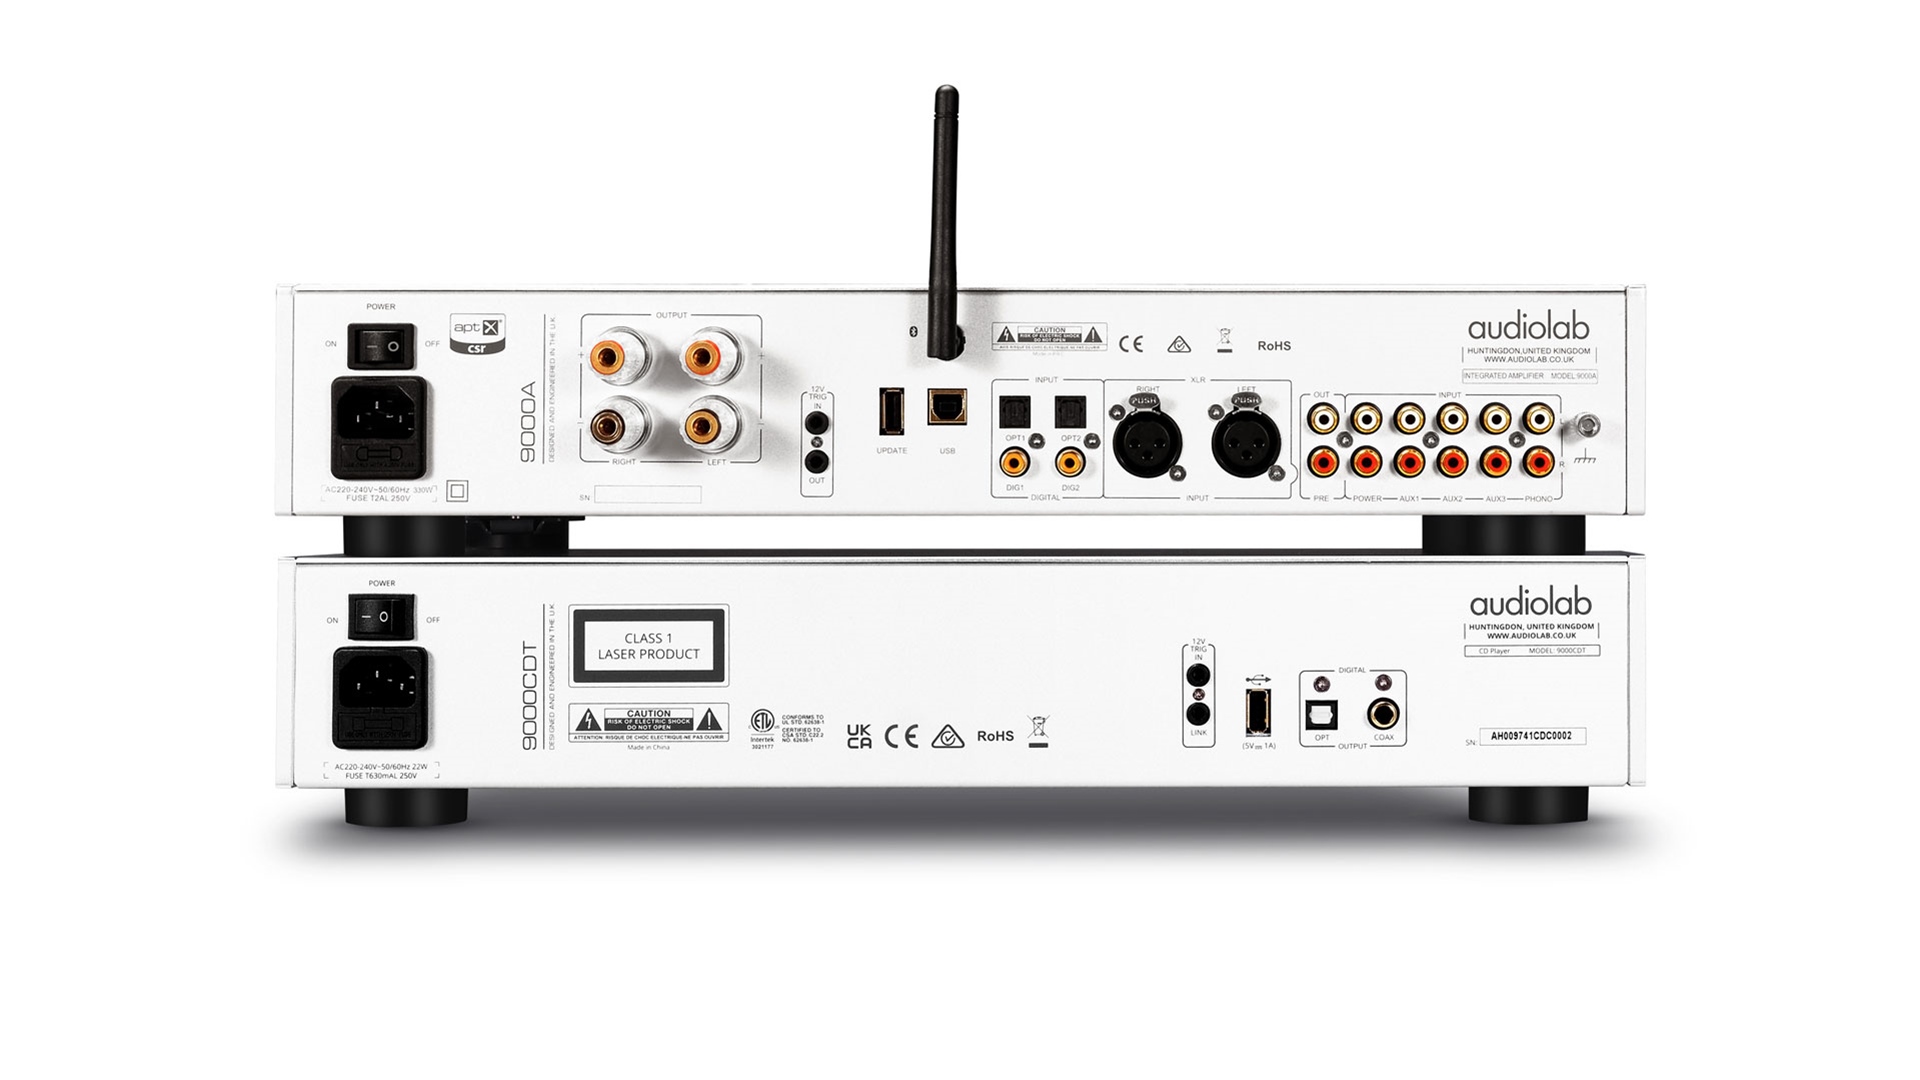 tinhte-audiolab-9000a-9000cdt-3.jpg